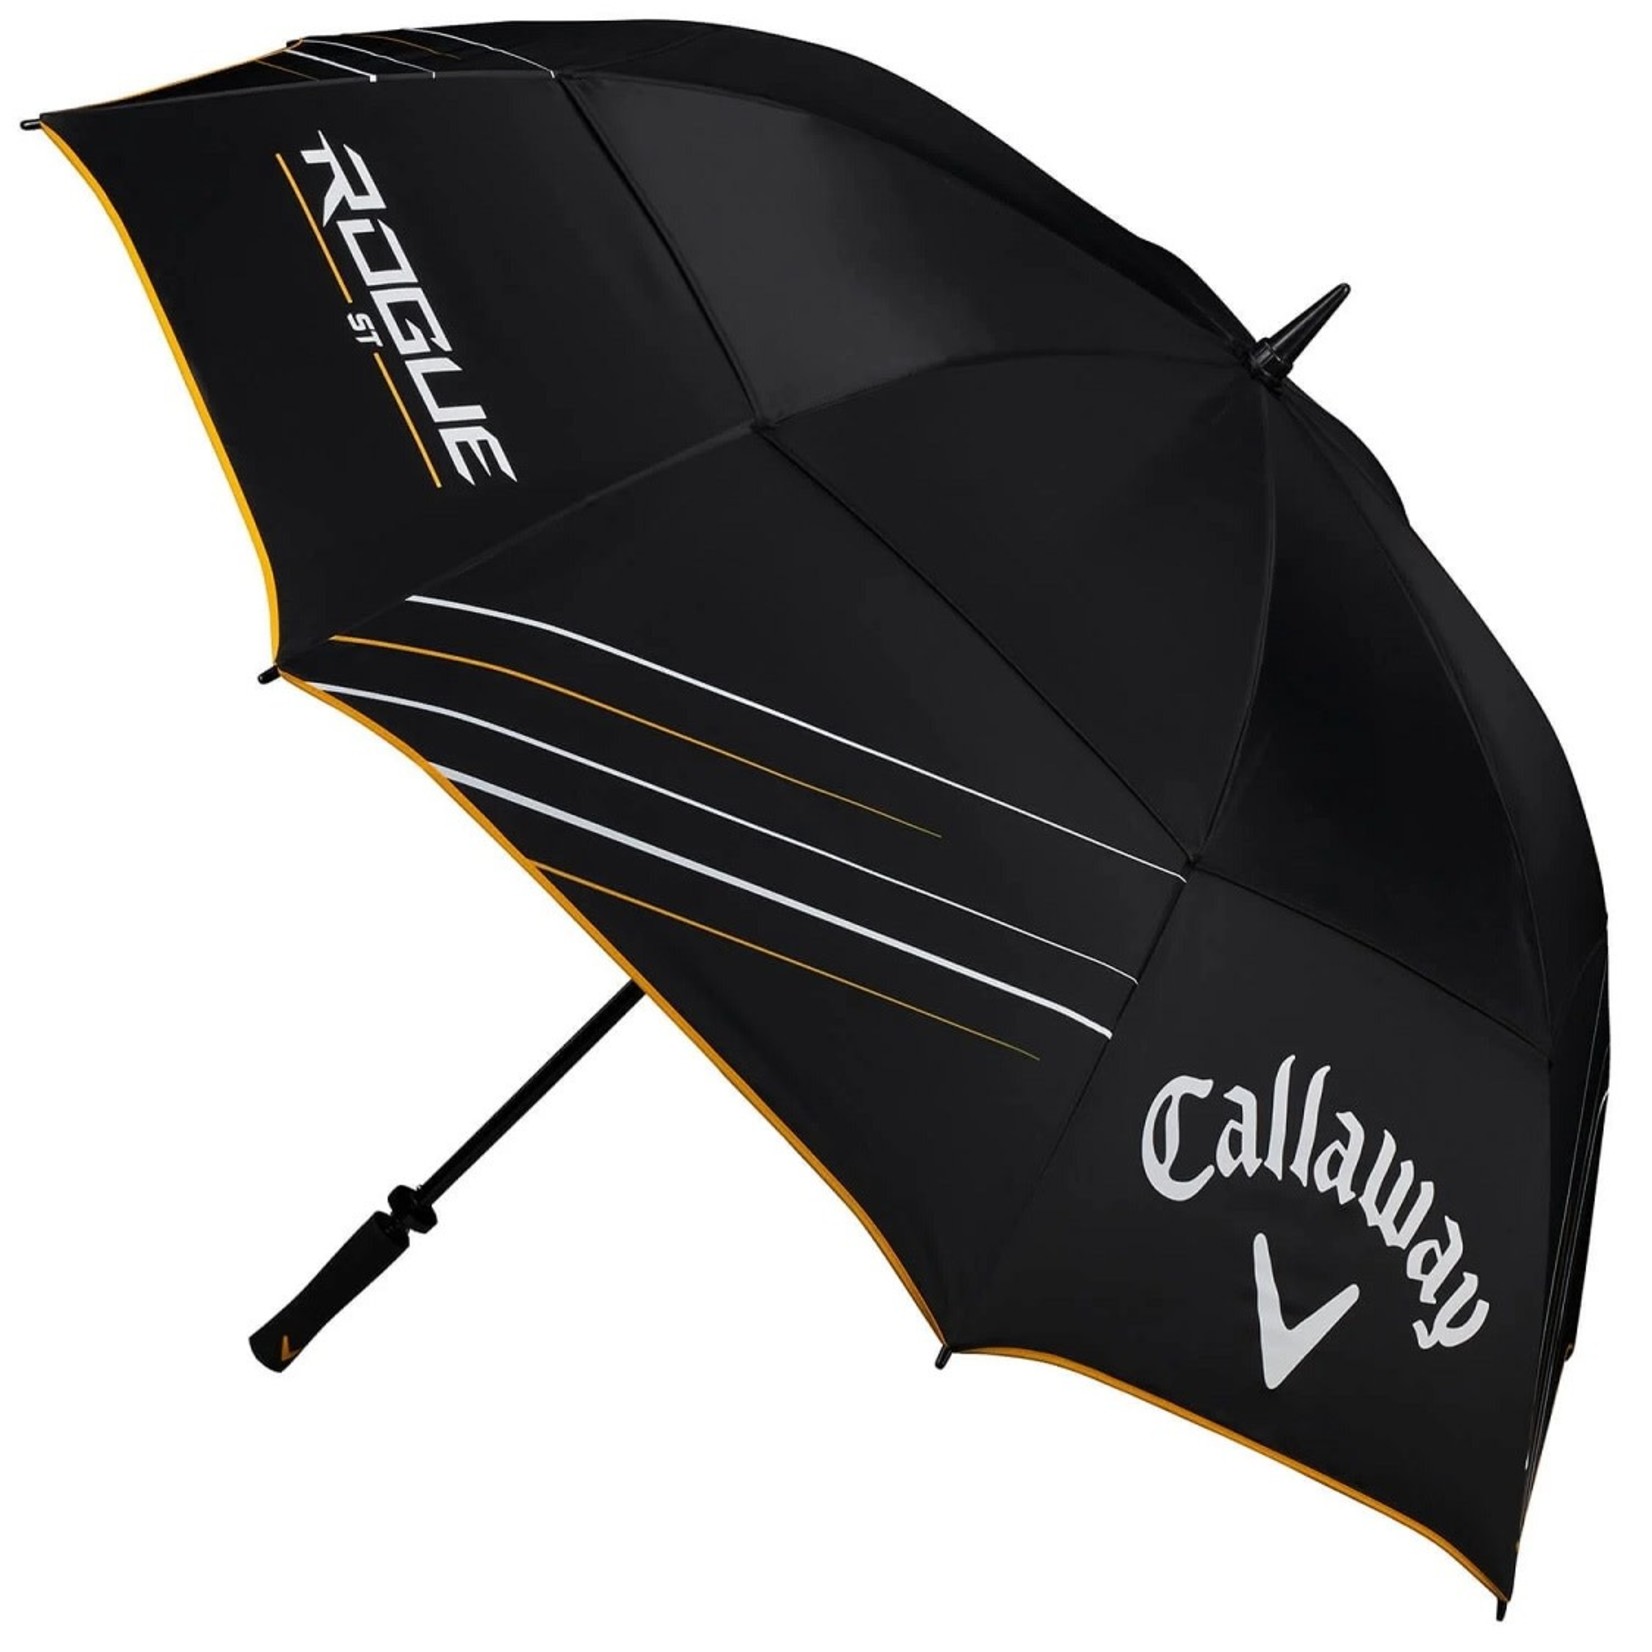 Callaway Callaway Umbrella Rogue ST Double Canopy 64" - Black/White/Gold